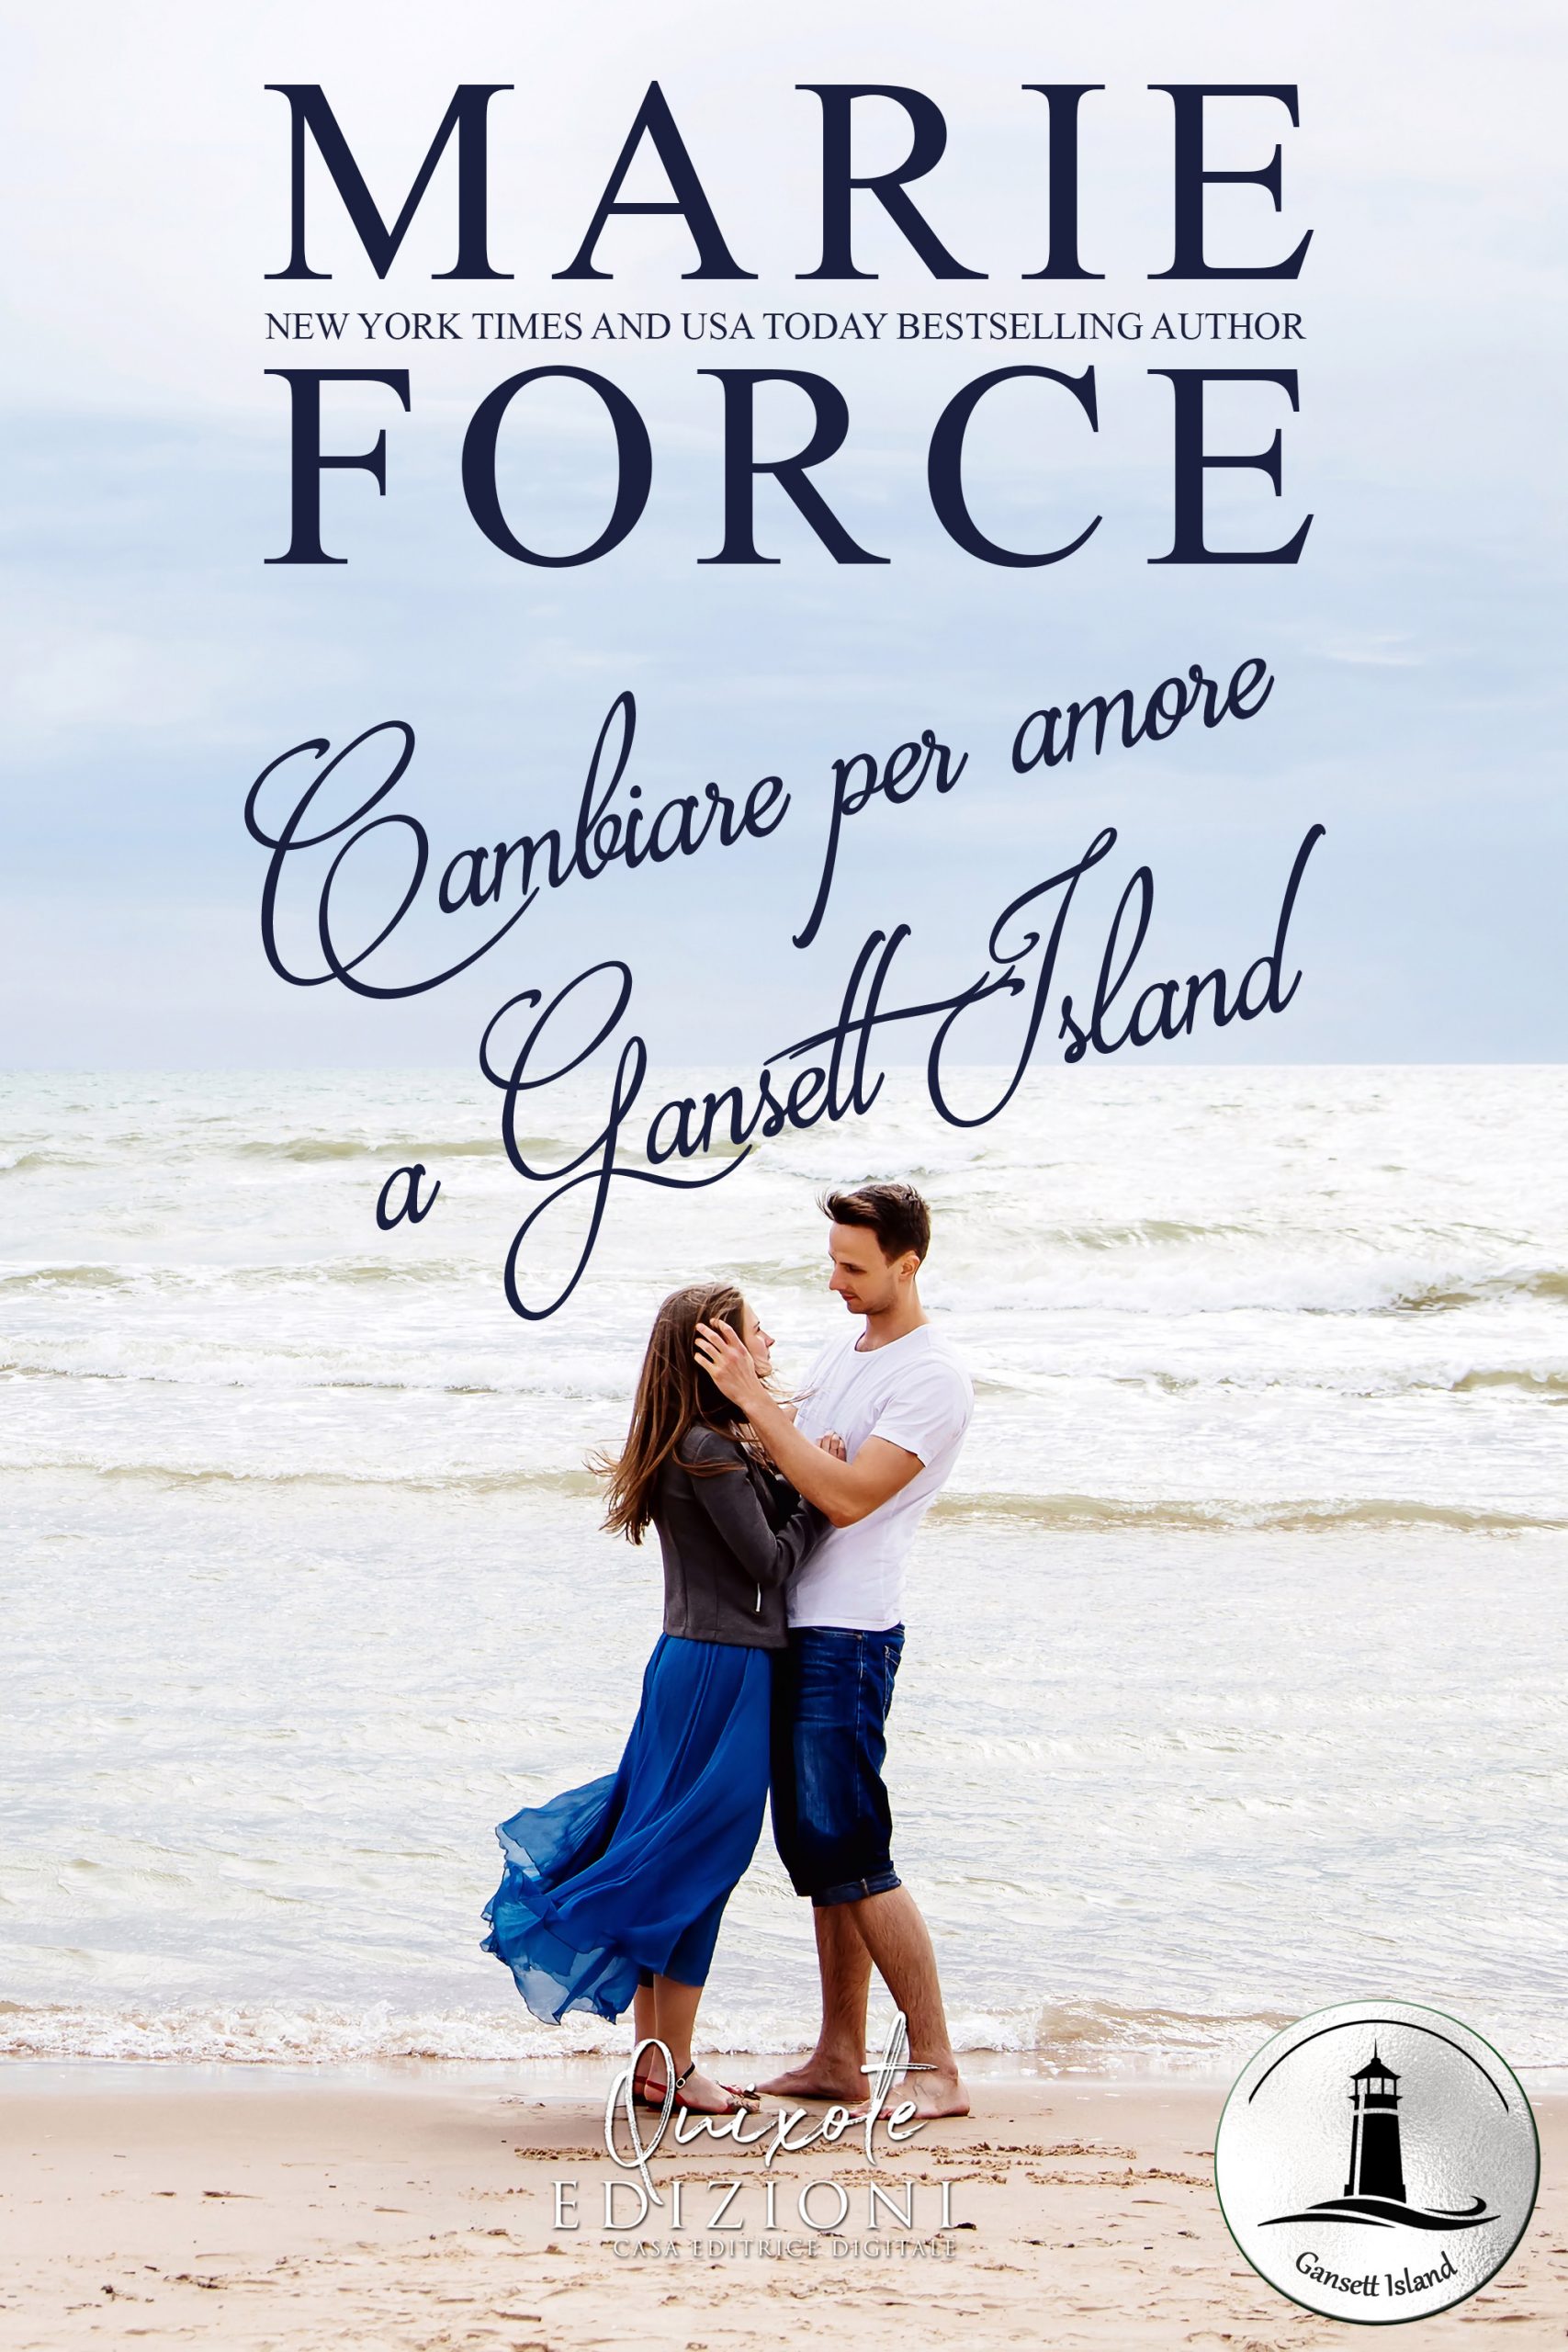 Segnalazione di uscita “Cambiare per amore a Gansett Island” di Marie Force